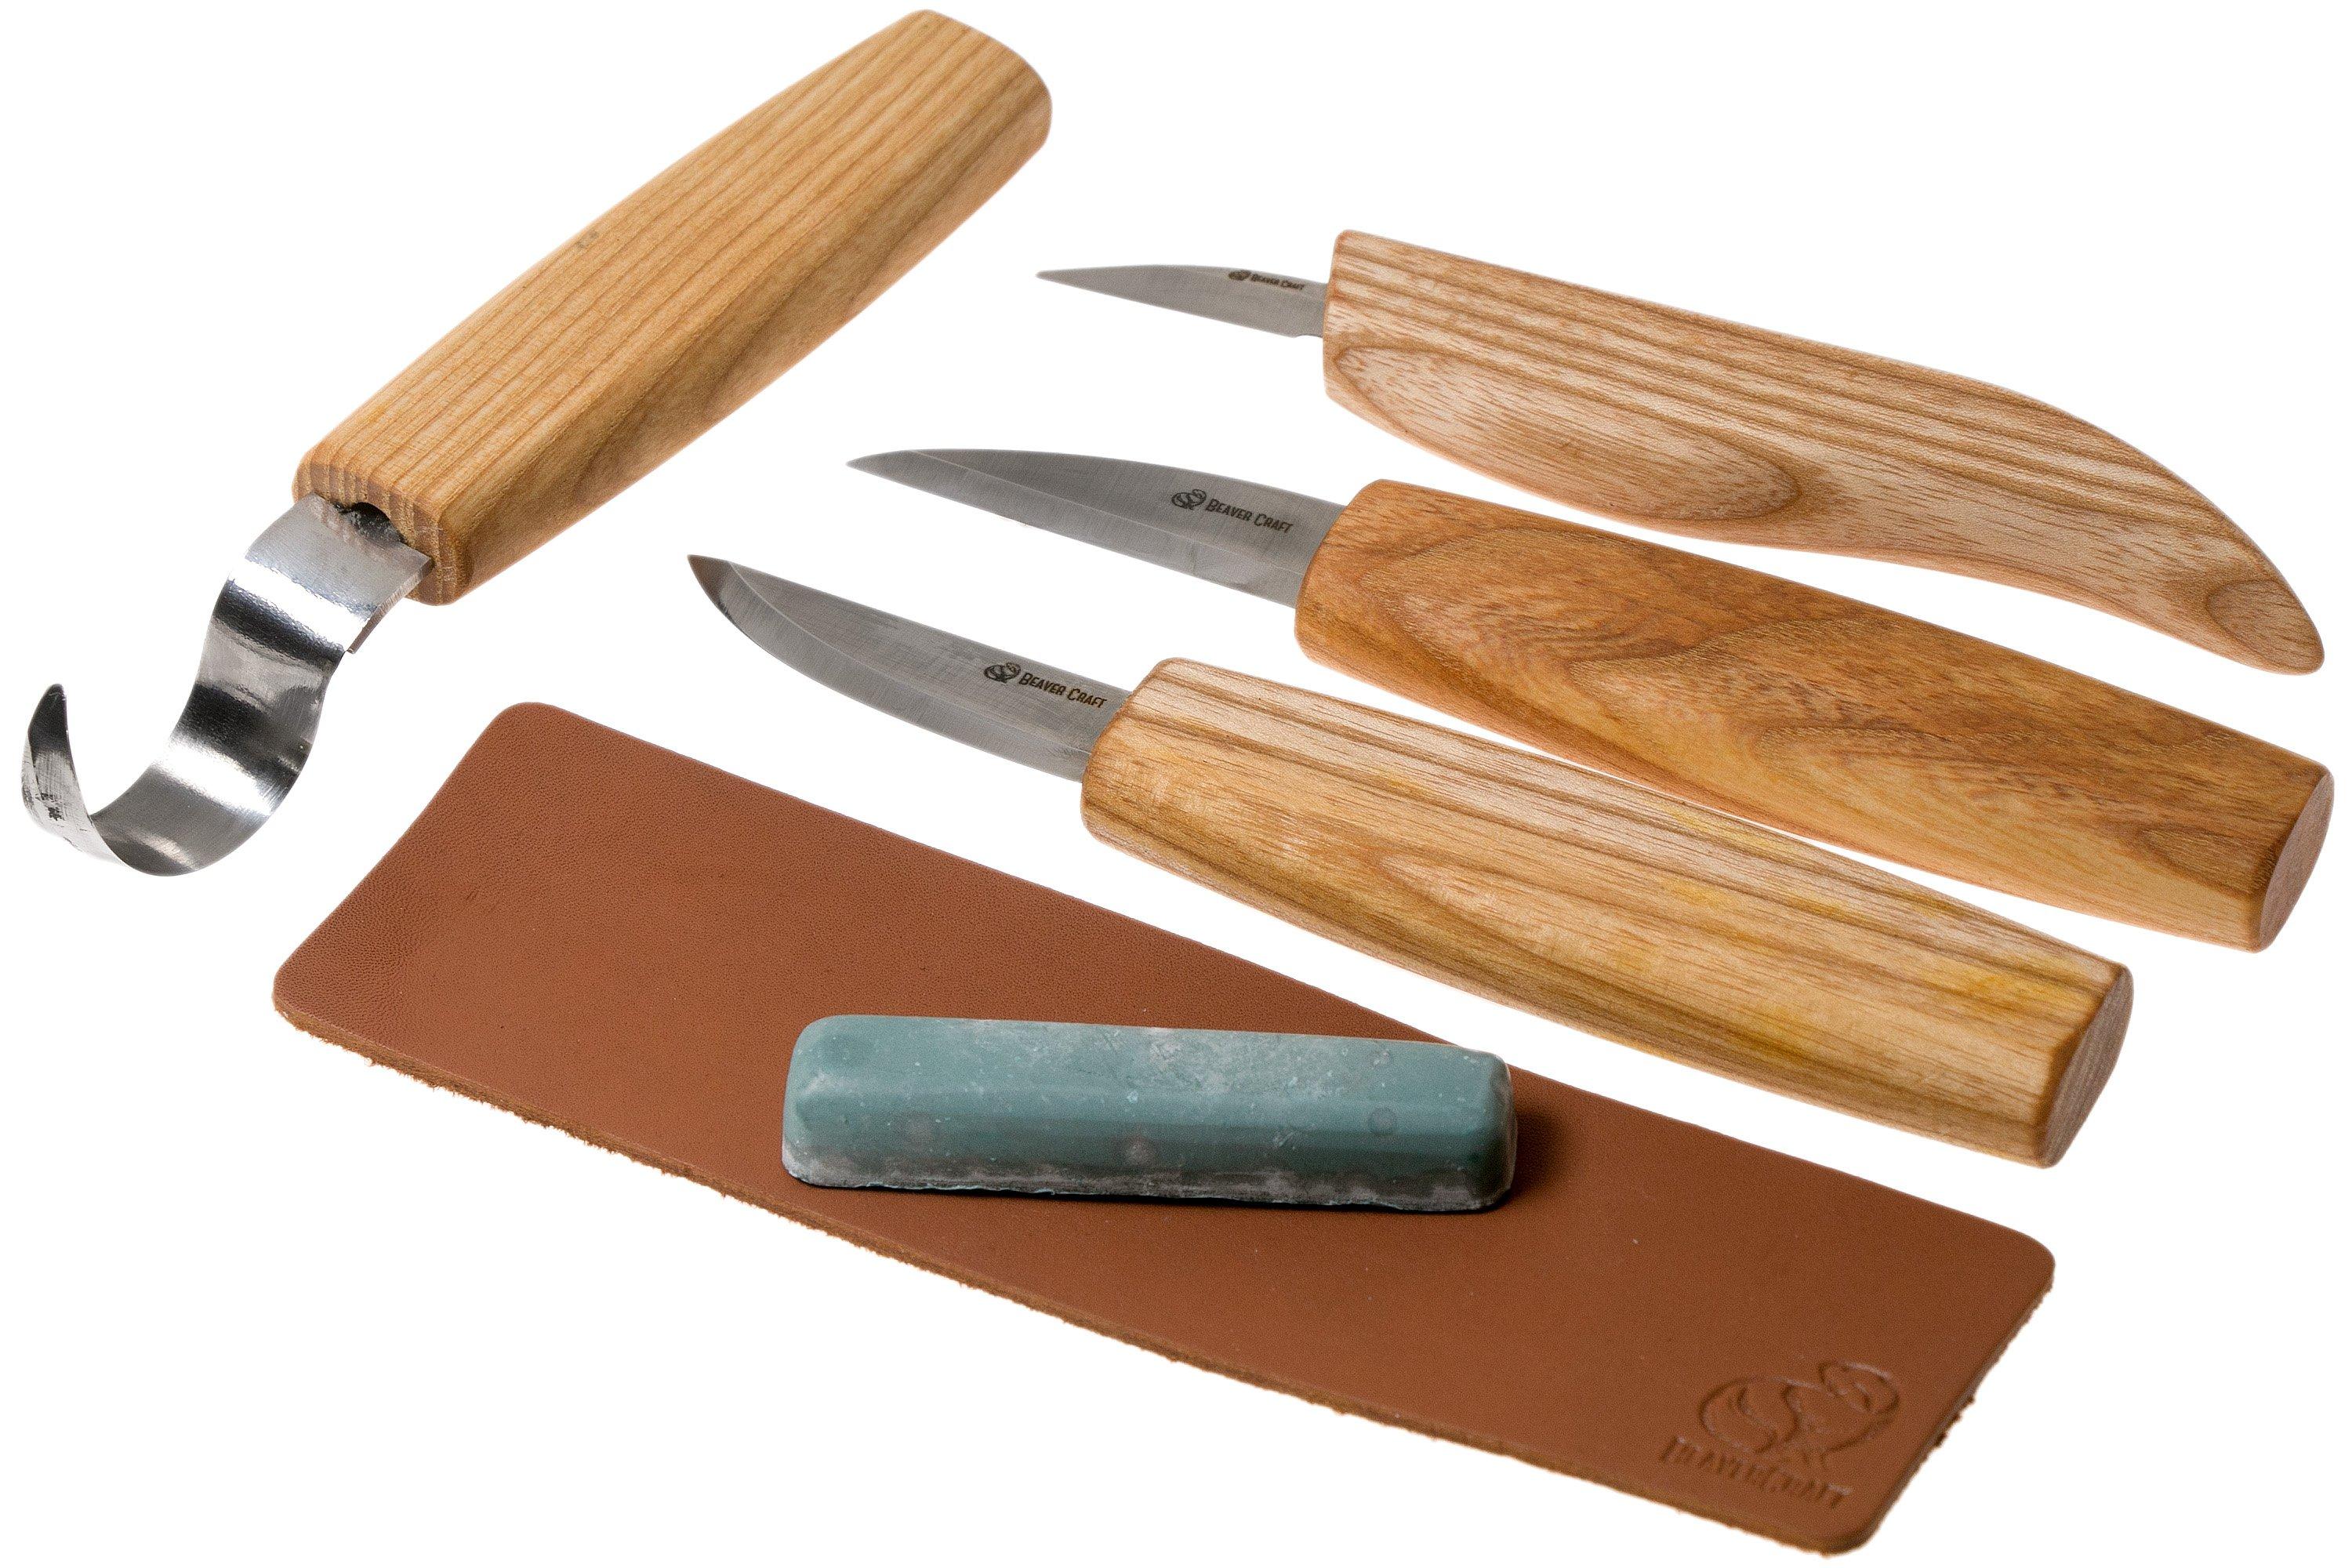 BeaverCraft Upgraded Spoon Carving Set S17, wood carving set